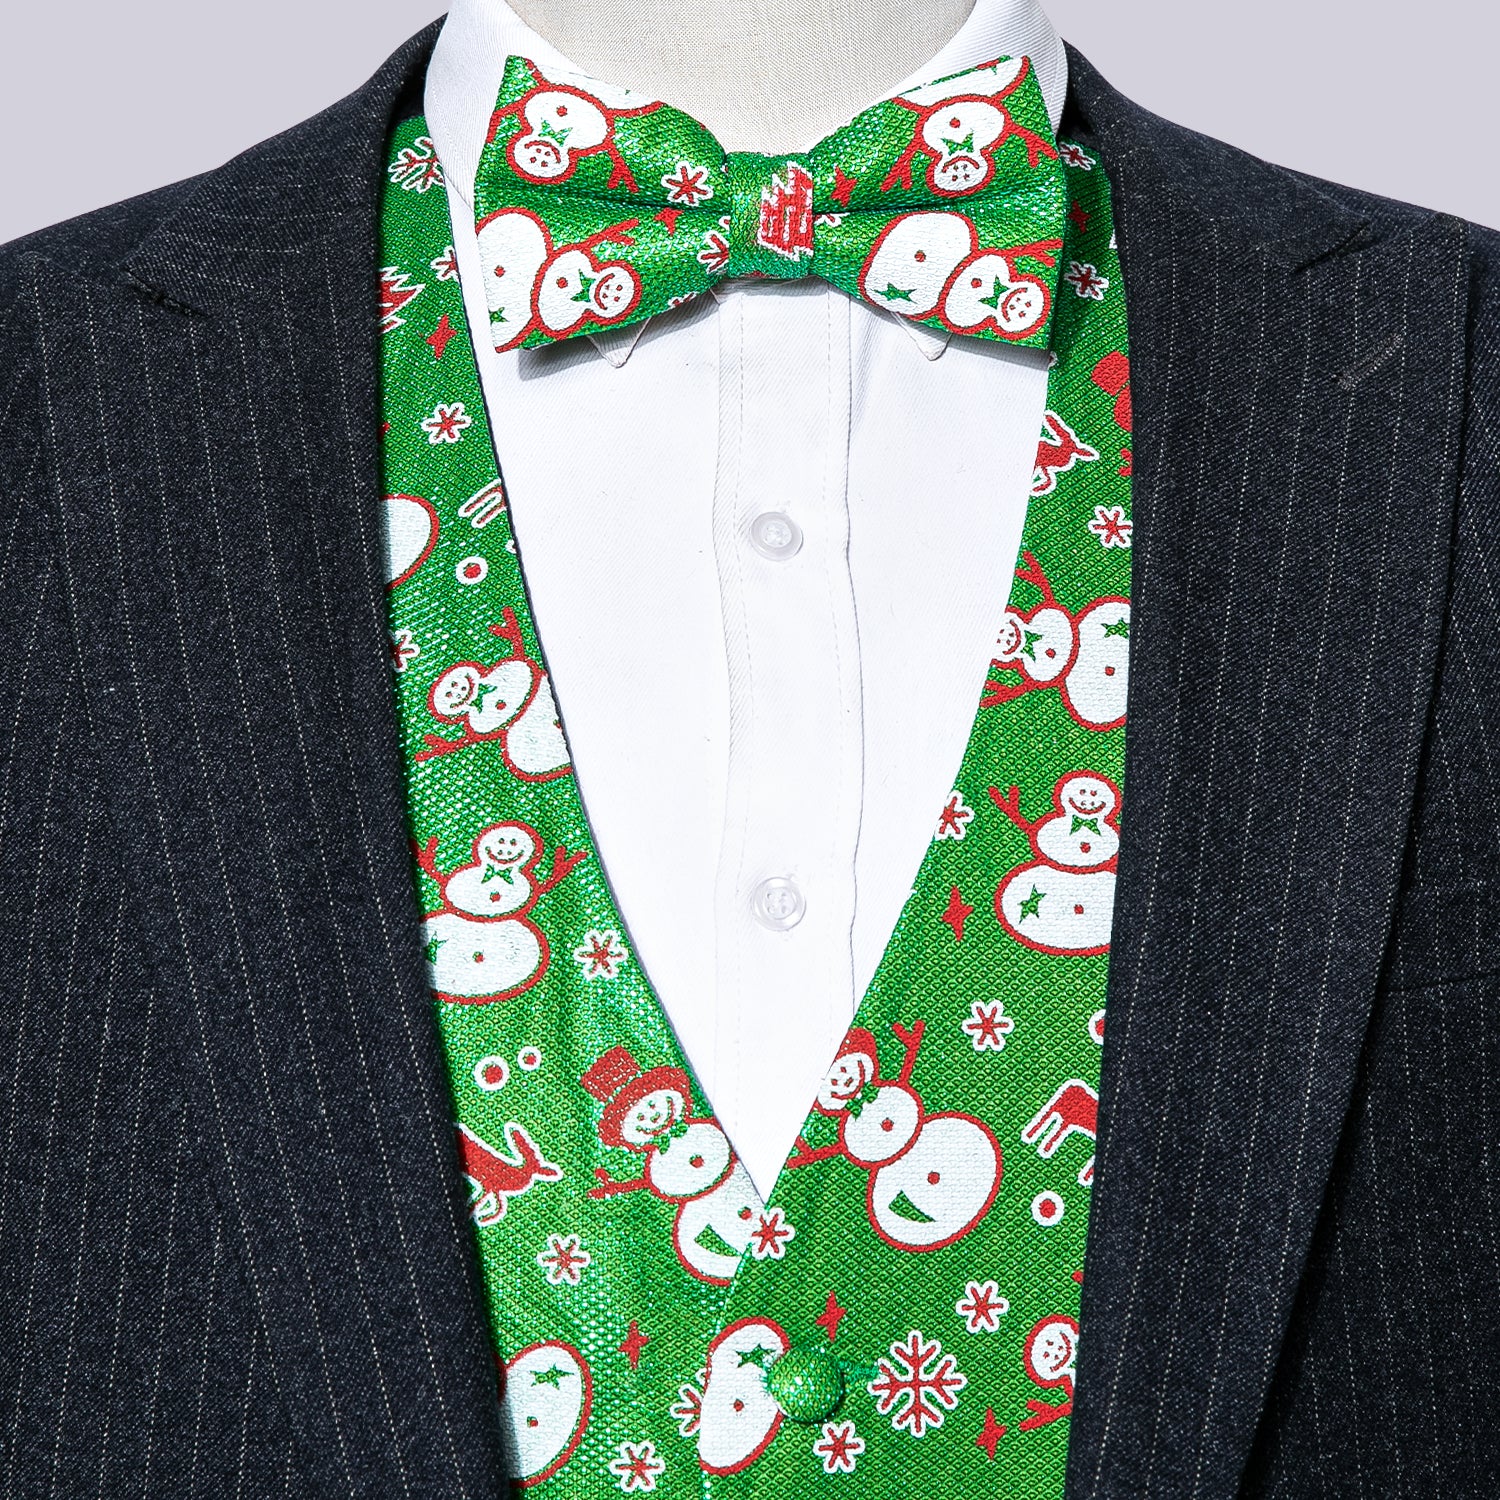 Barry.wang Christmas Vest Men's Novelty Green White Snowman Silk Vest Green Bowtie Set